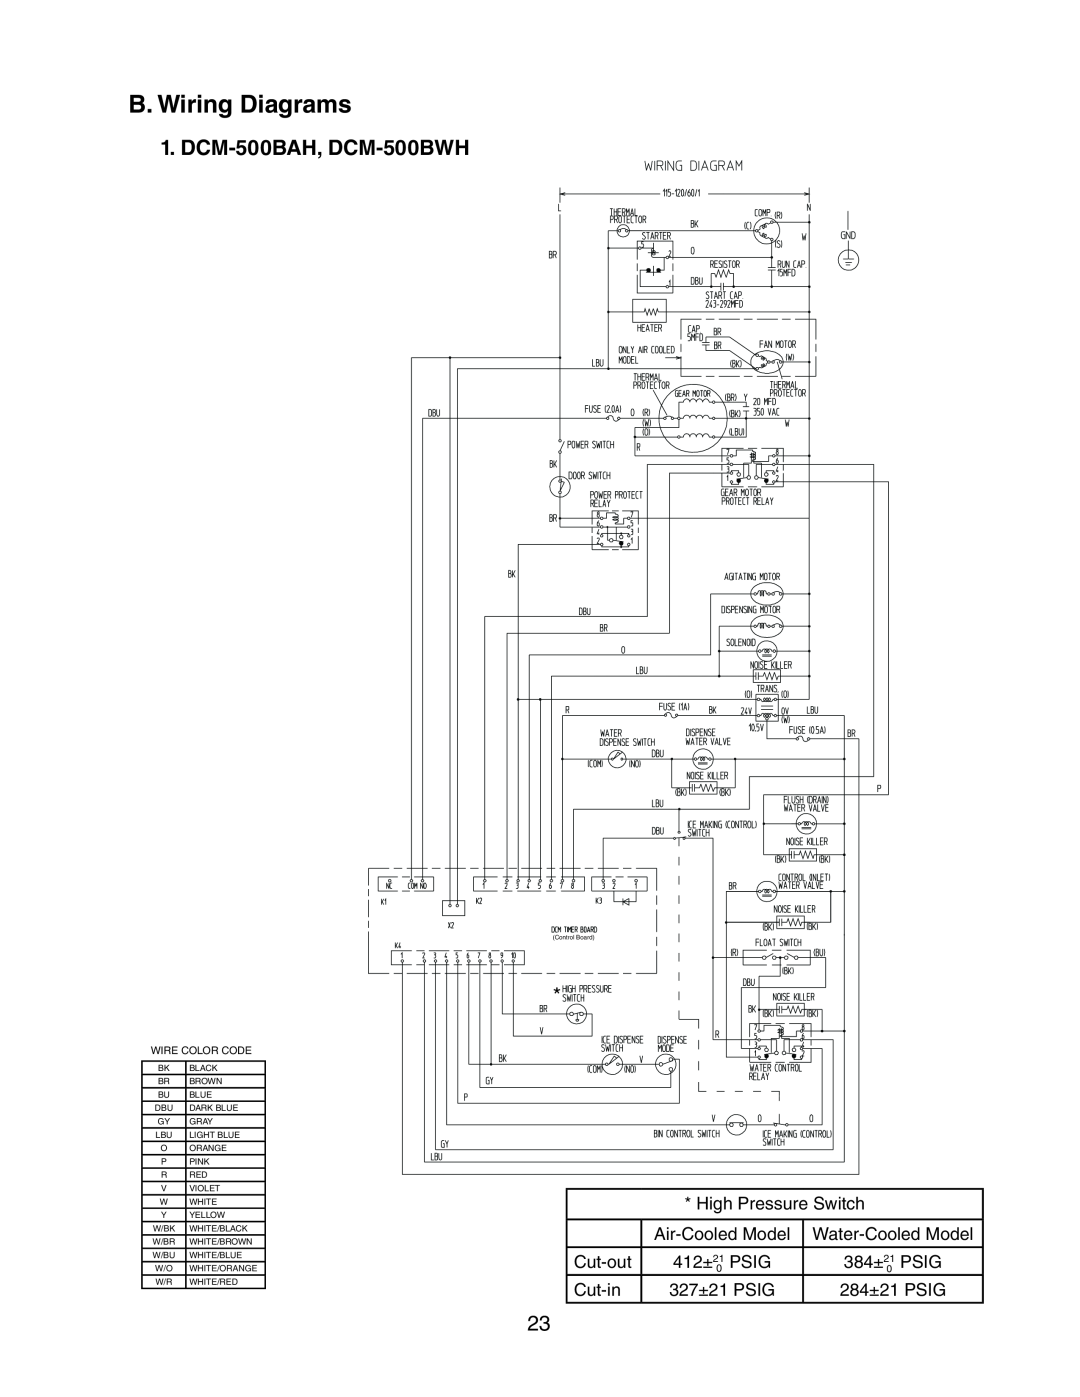 Hoshizaki B. Wiring Diagrams, DCM-500BAH, DCM-500BWH, High Pressure Switch, Air-CooledModel, Water-CooledModel, Cut-out 